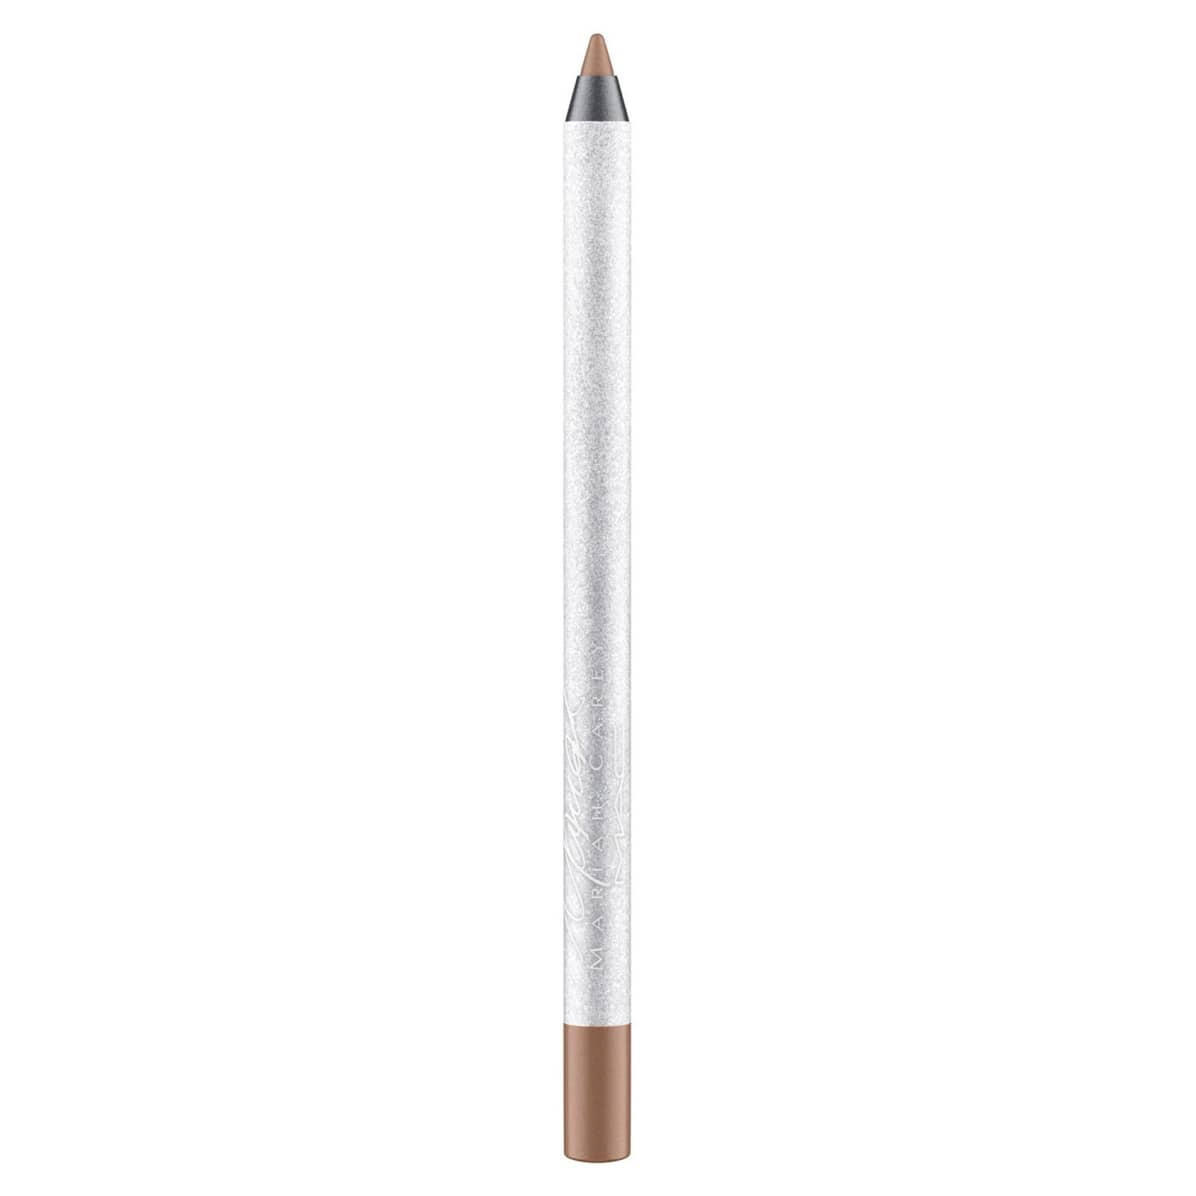 MAC Pro Longwear Lip Pencil Mariah Carey Collection So Dramatique